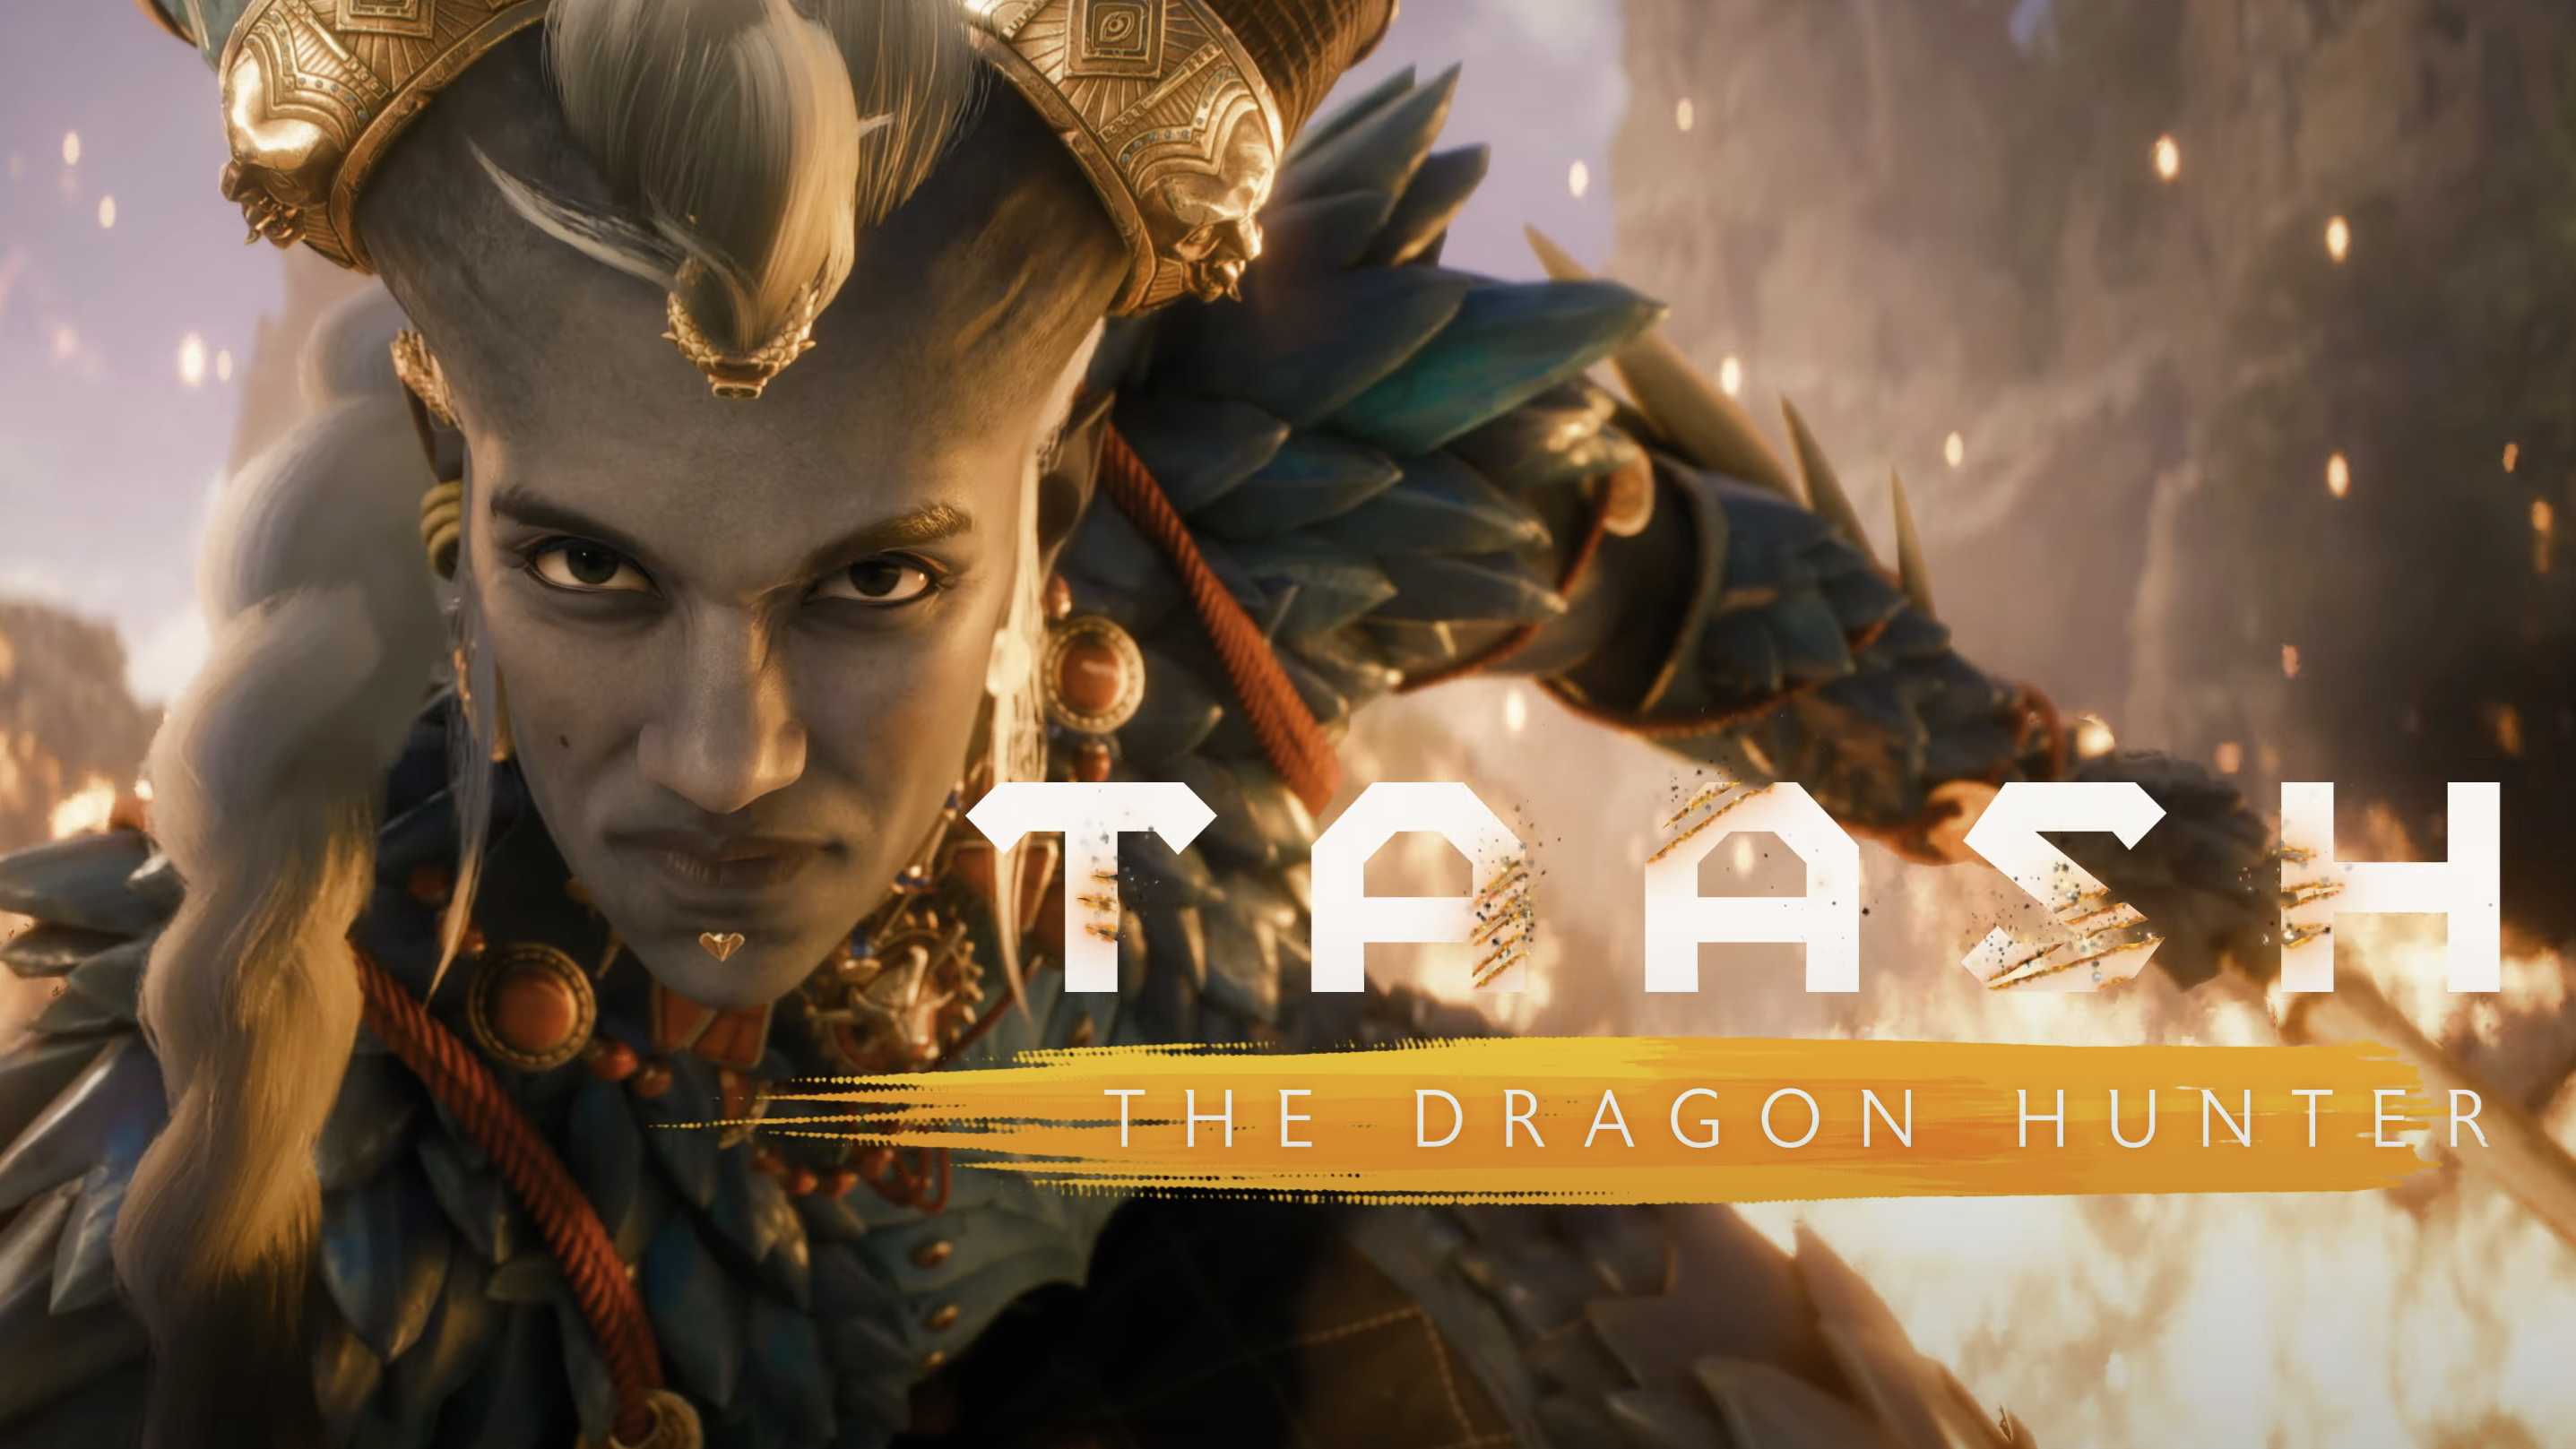 Dragon Age: The Veilguard trailer